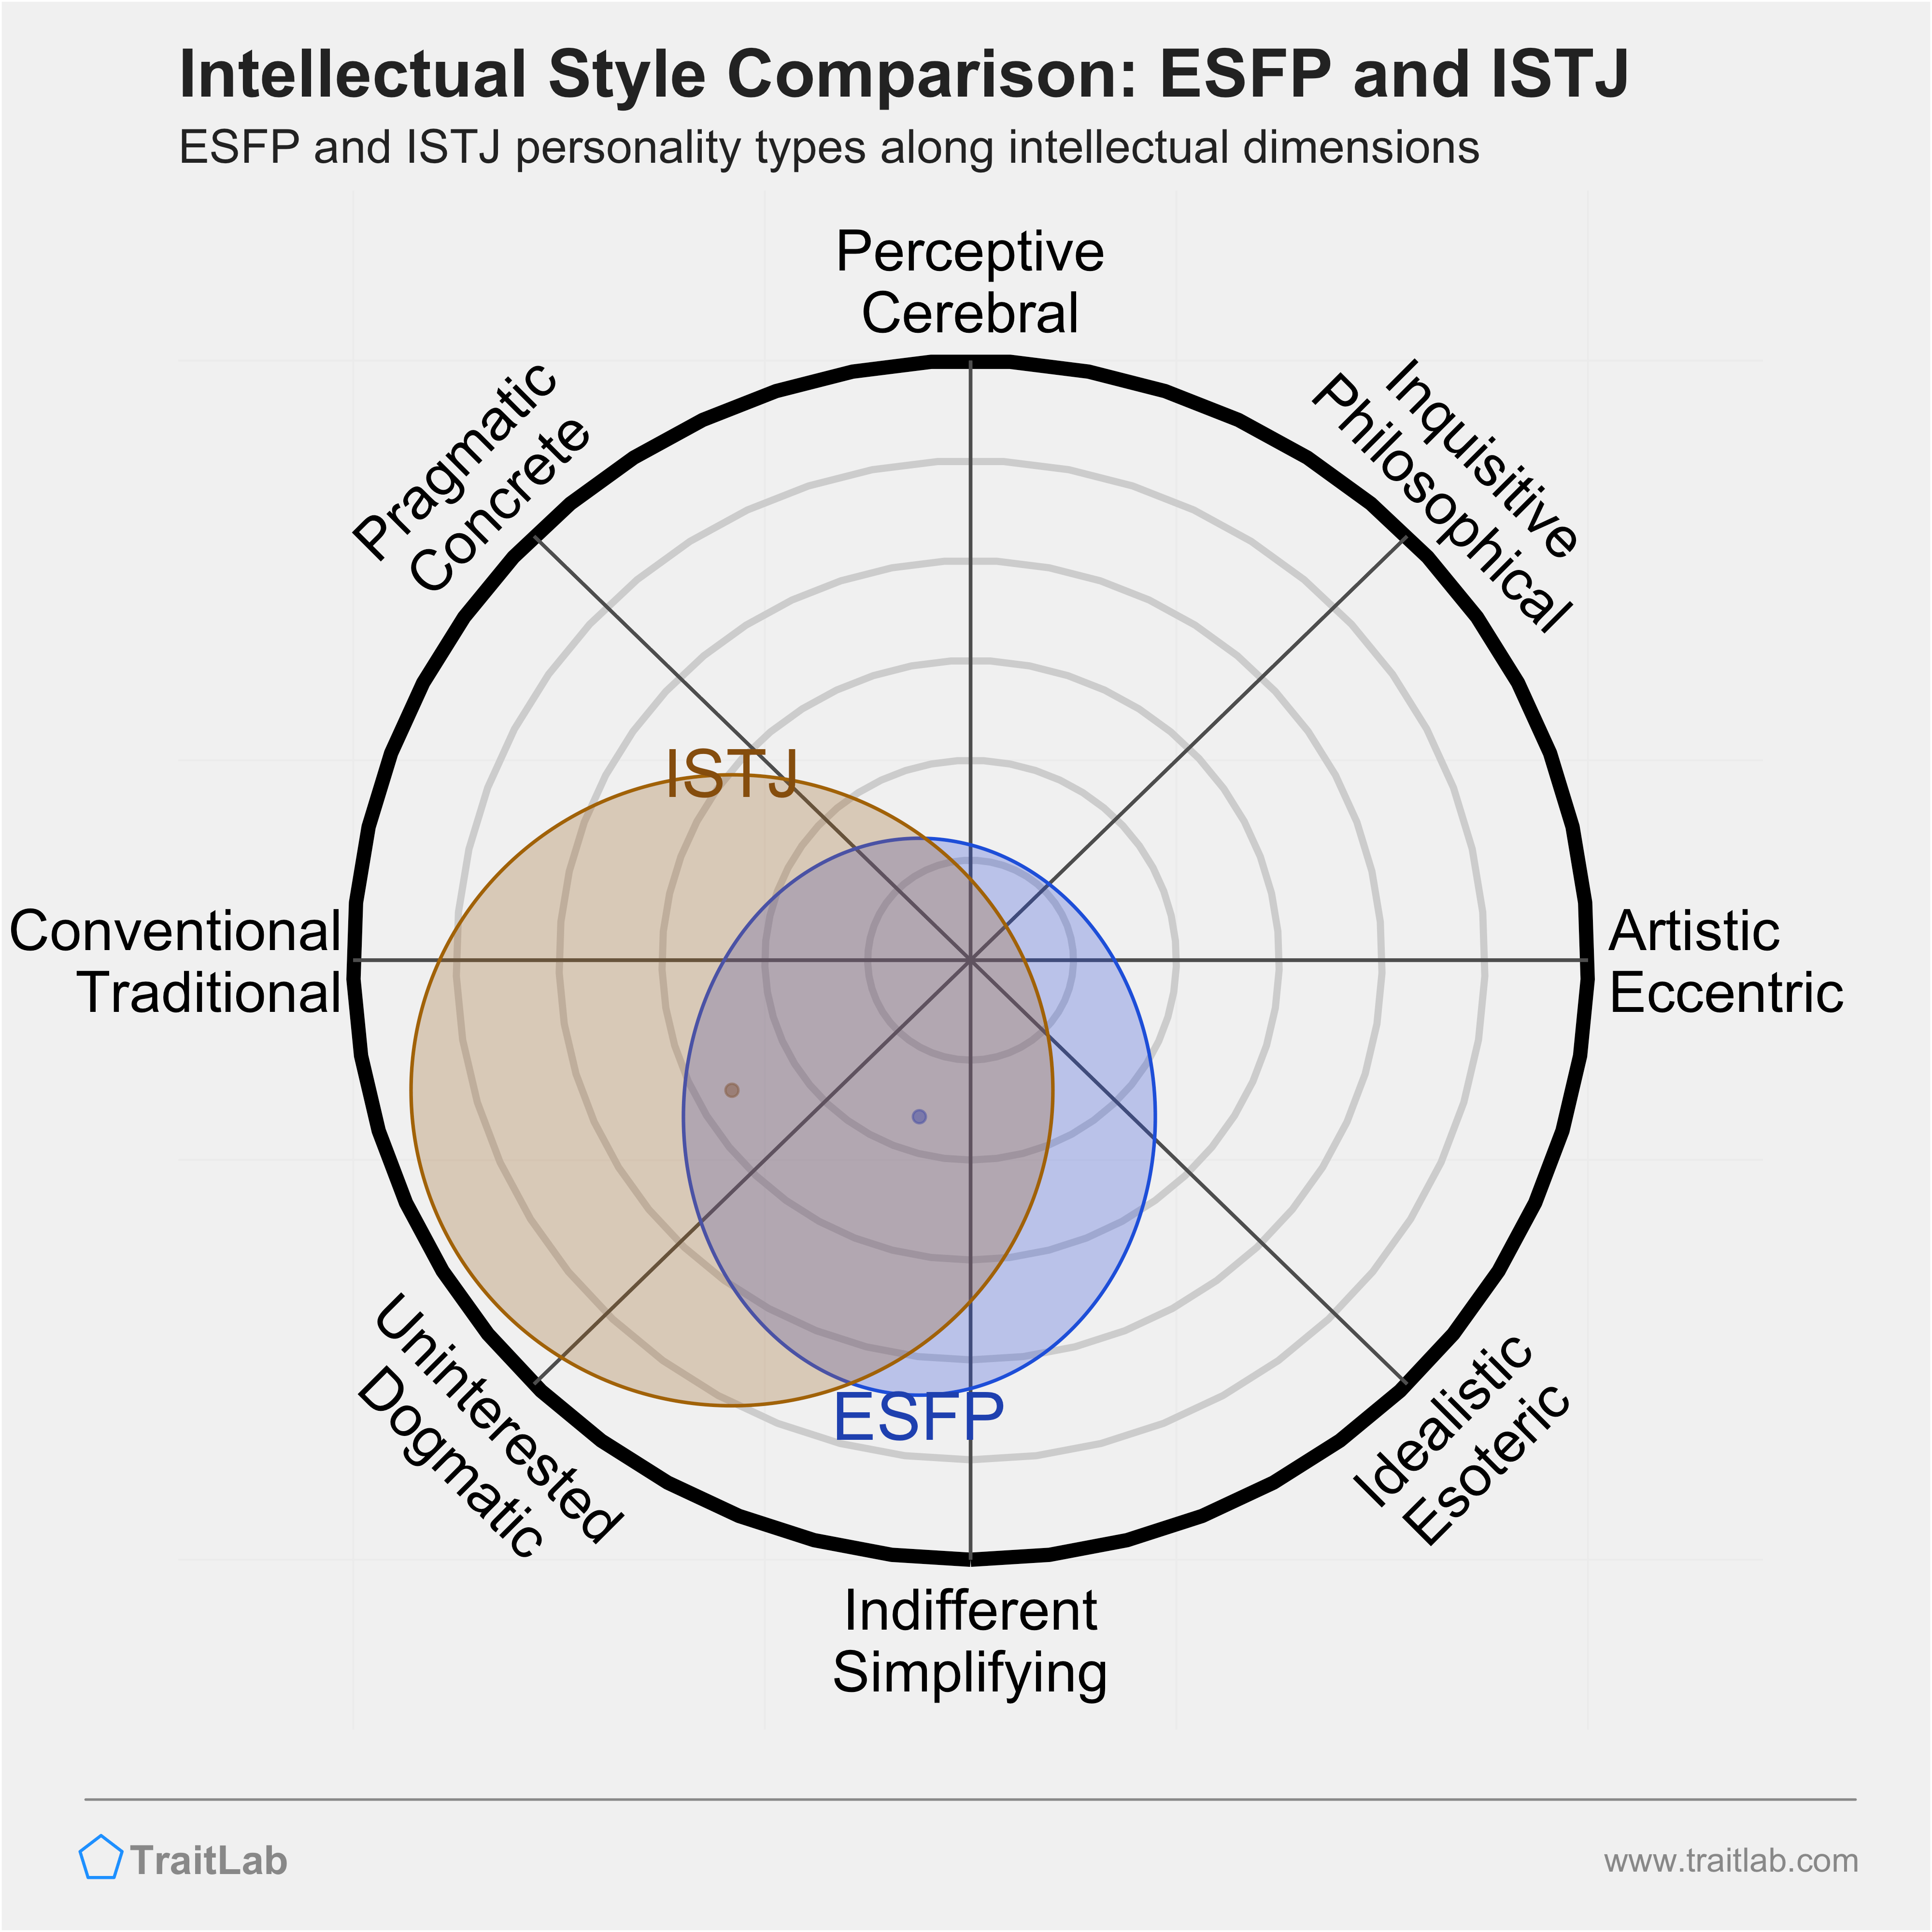 ESFP and ISTJ comparison across intellectual dimensions